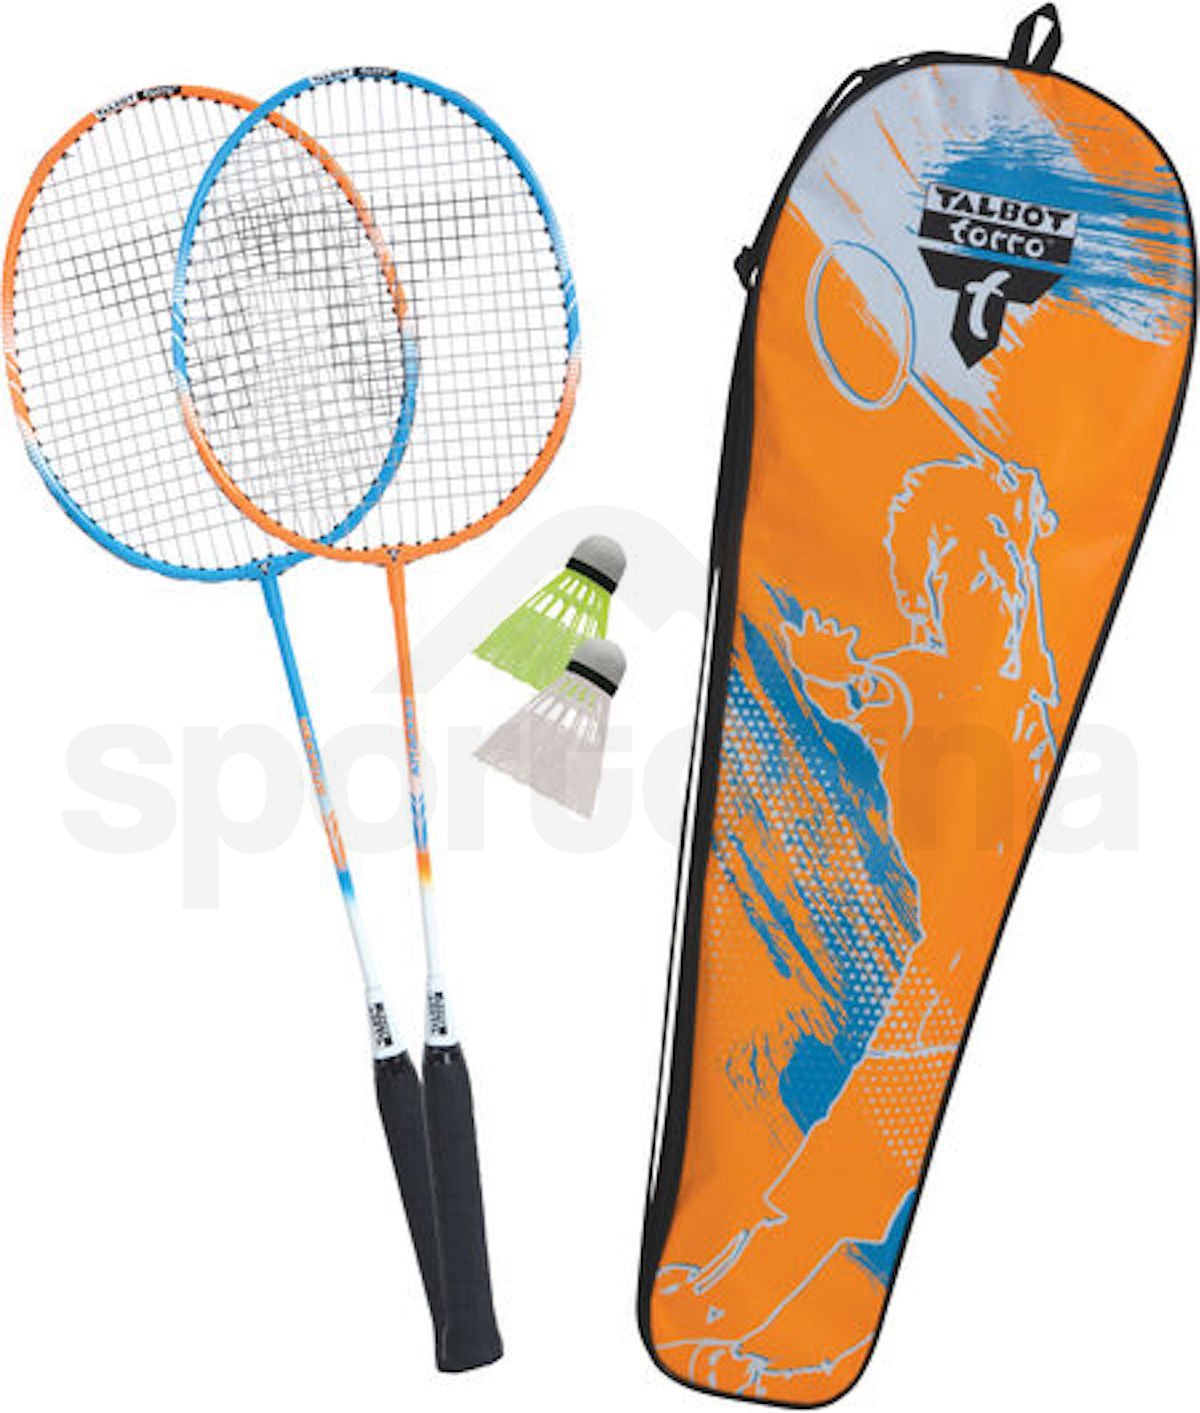 449411-badmintonová sada Talbot Torro Attacker-oranzova